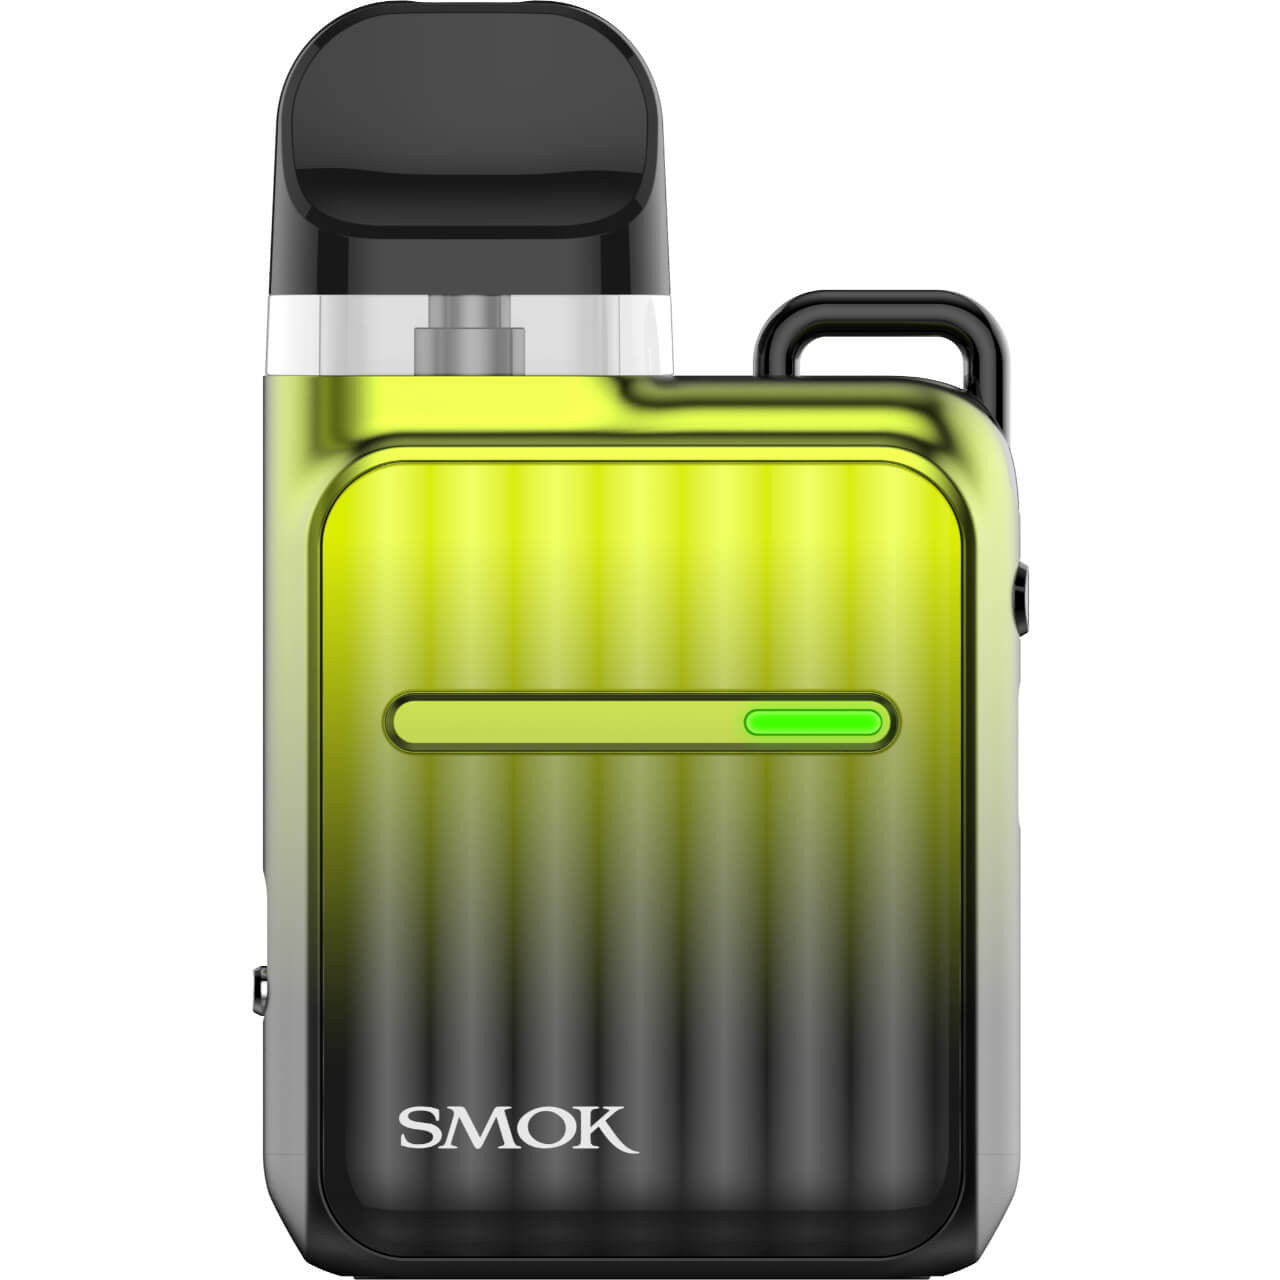 SMOK NOVO Master Box Kit Best Sales Price - Vape Kits